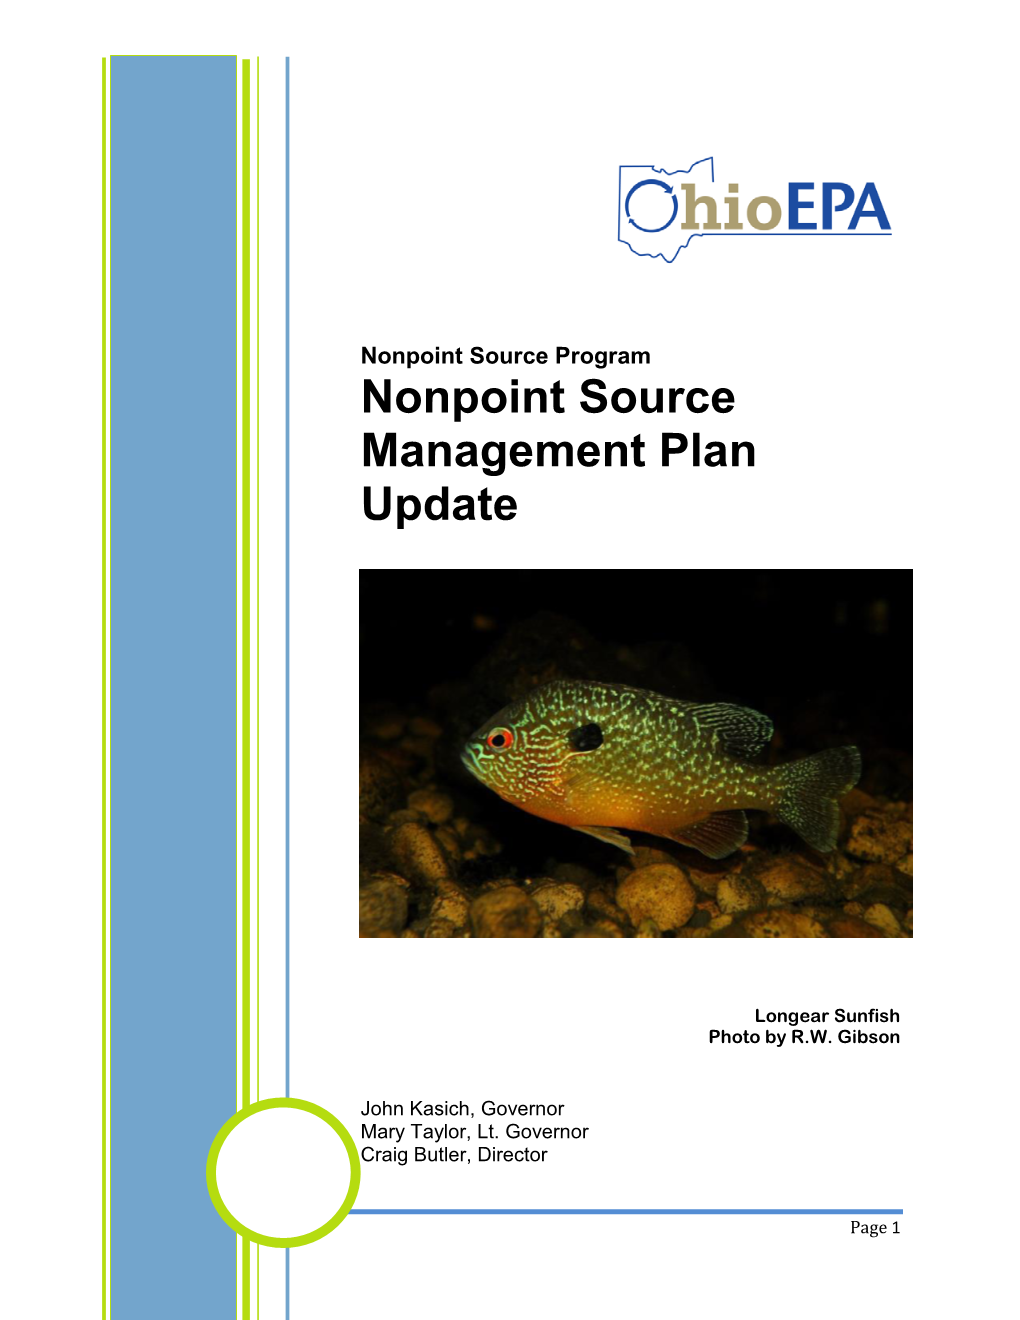 Nonpoint Source Management Plan Update